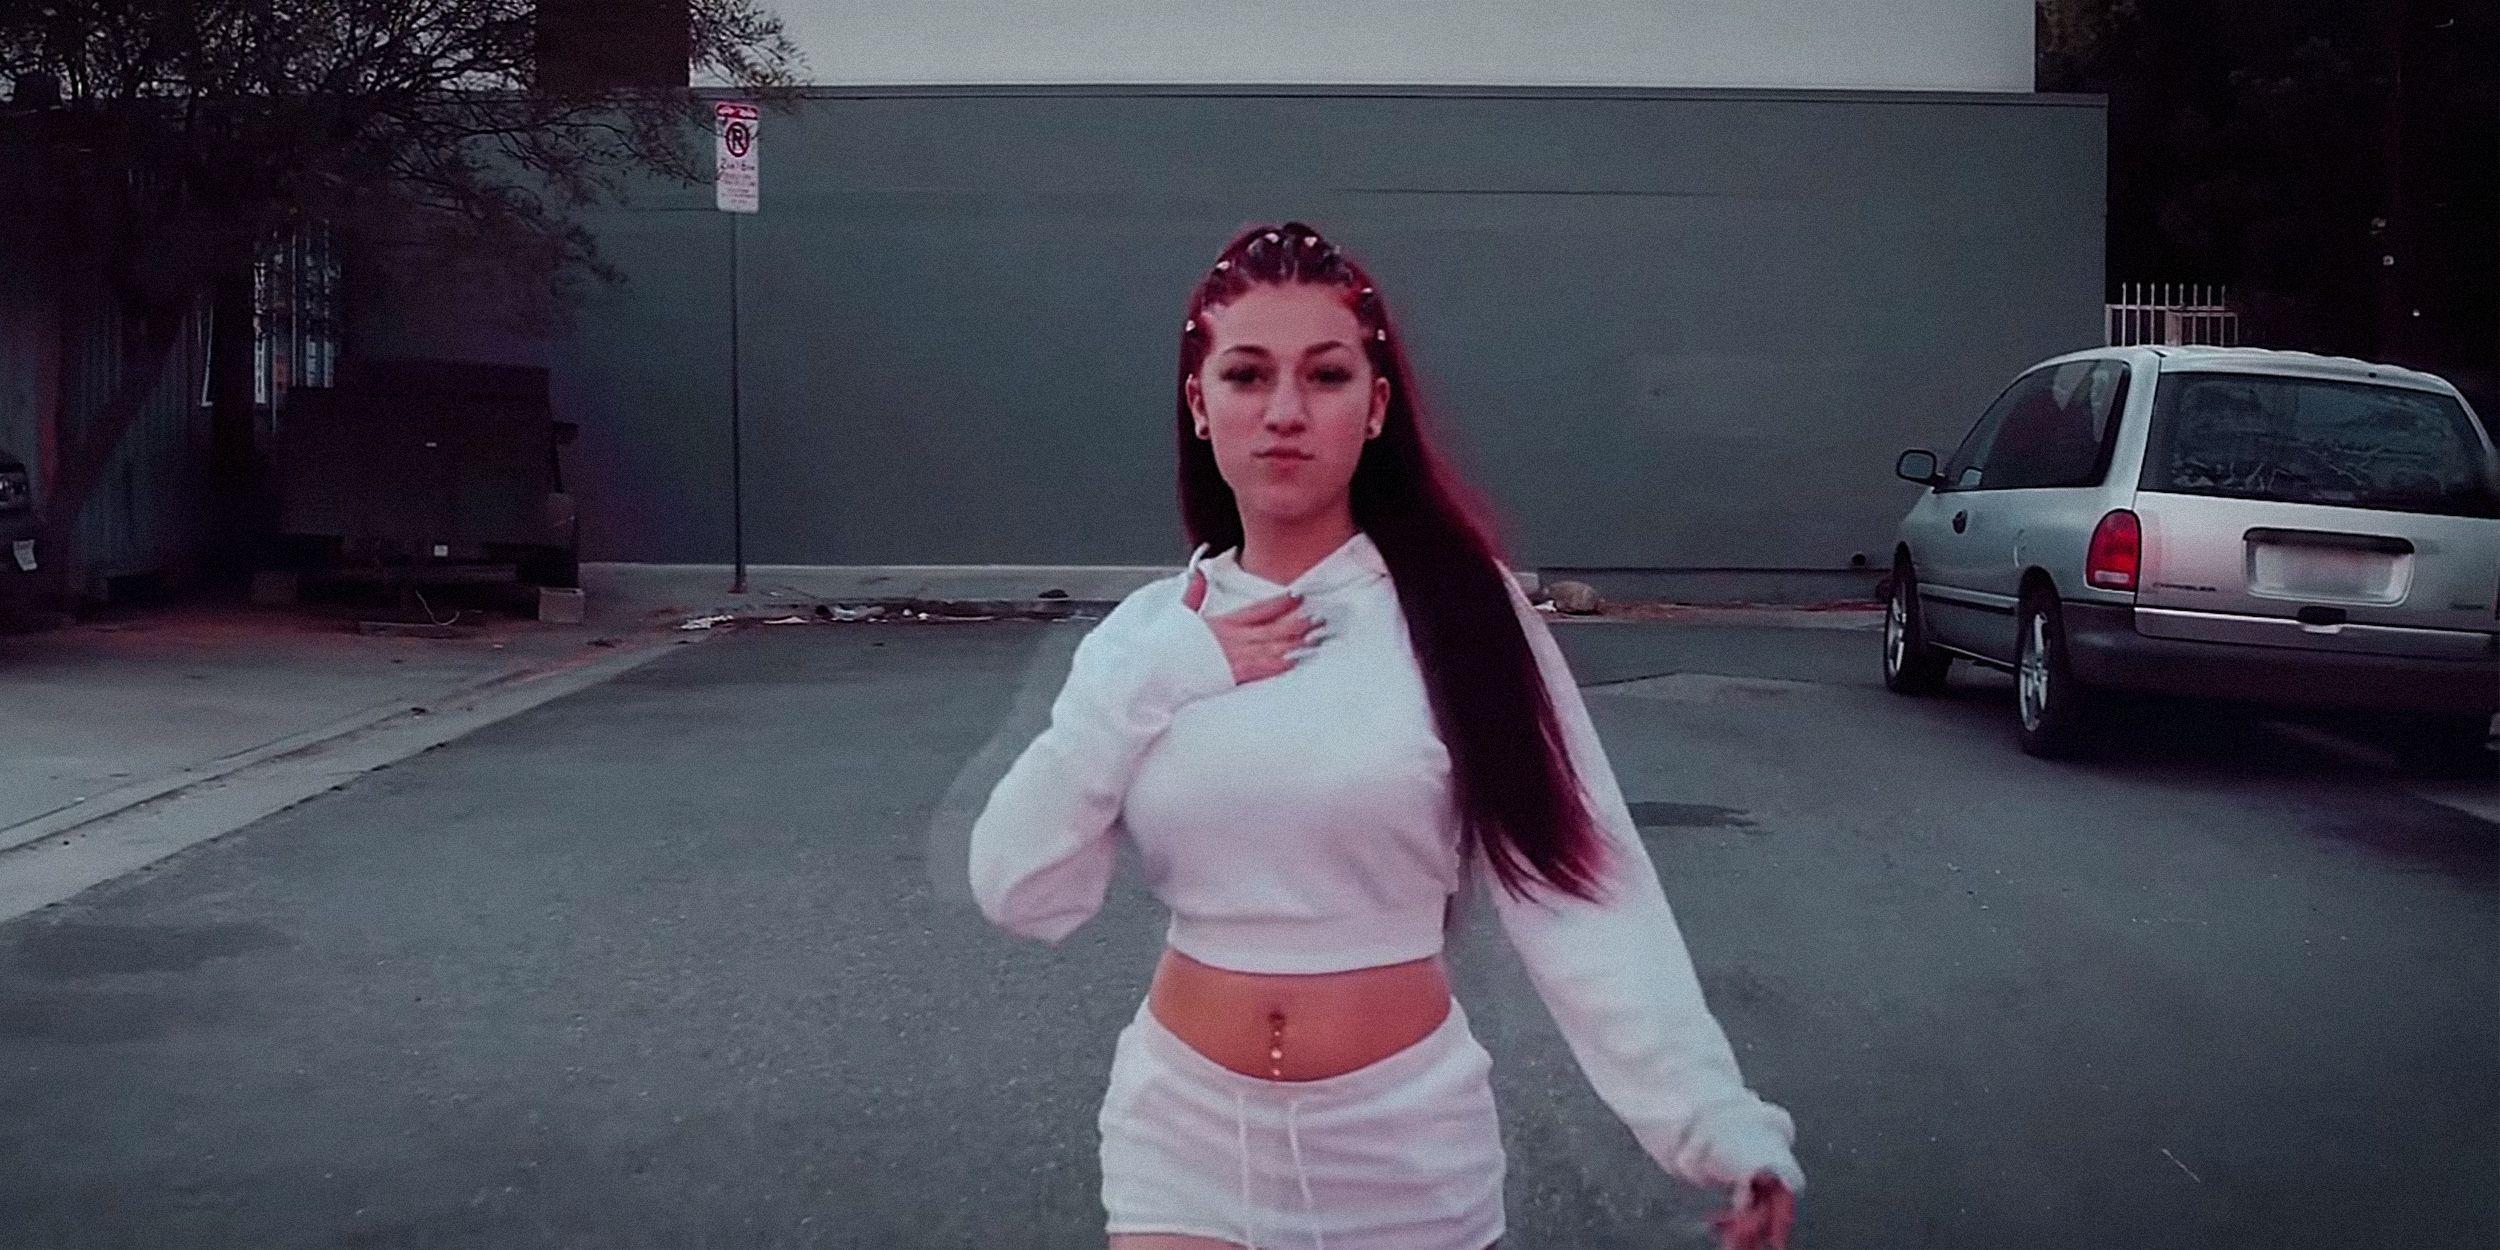 In Defense of 'Cash Me Ousside' Teen Danielle Bregoli's Rap Video